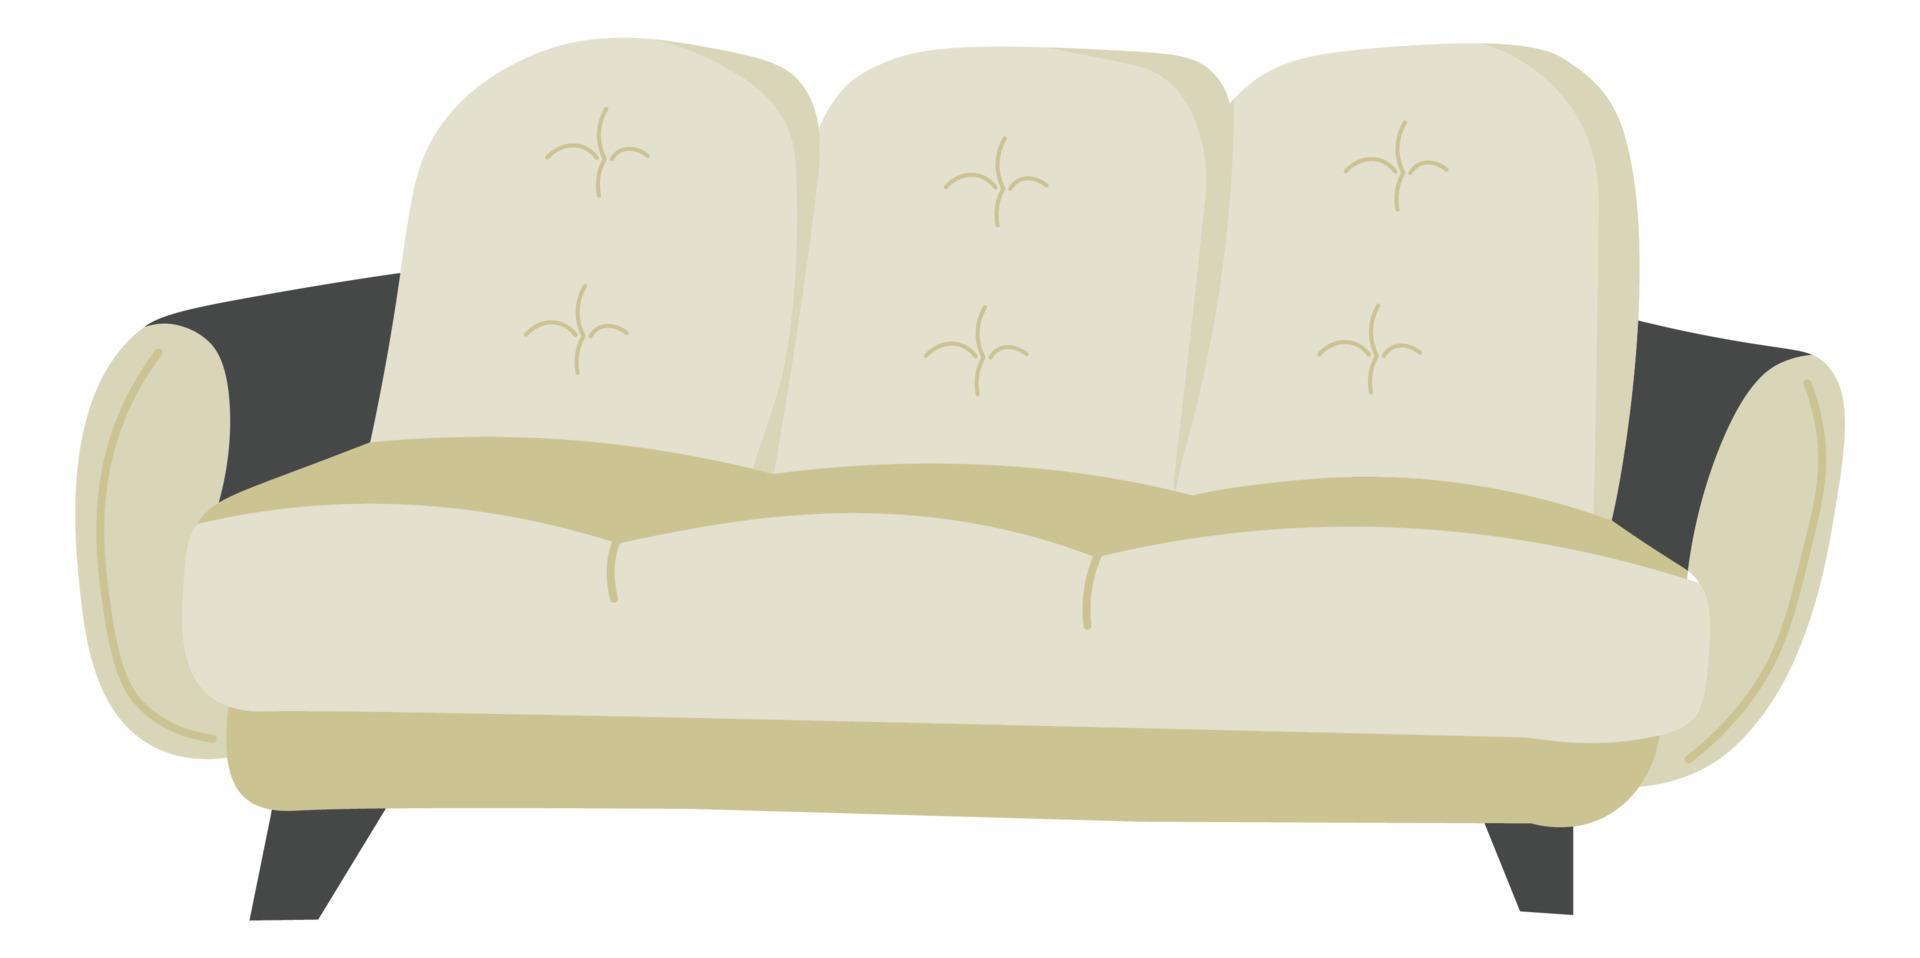 Soft fabric sofa, minimalist furniture design vector